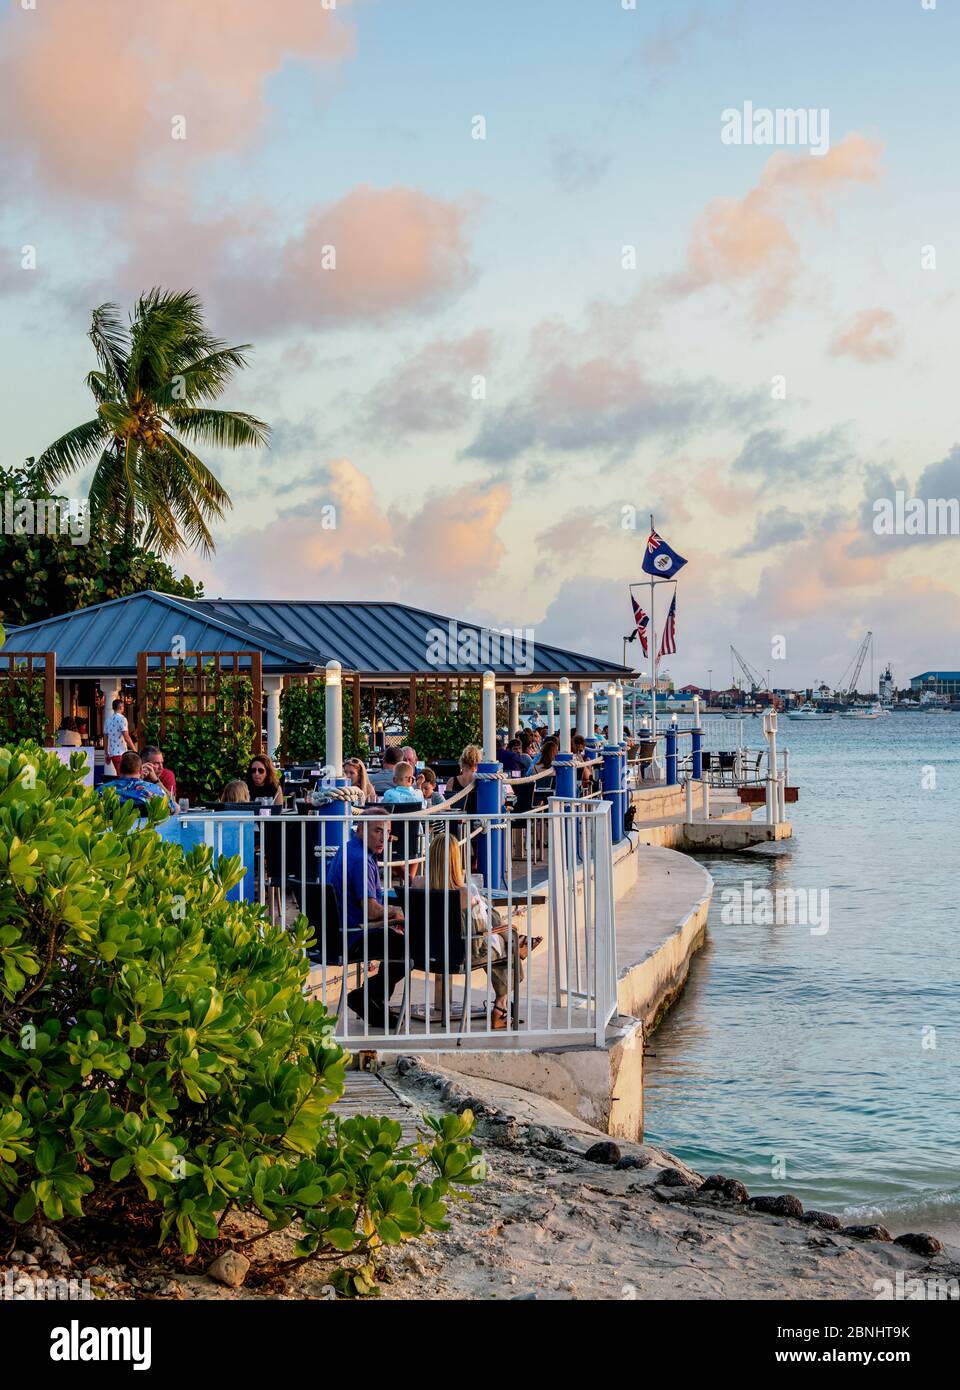 Restaurant The Wharf, George Town, Grand Cayman, îles Caïman Banque D'Images